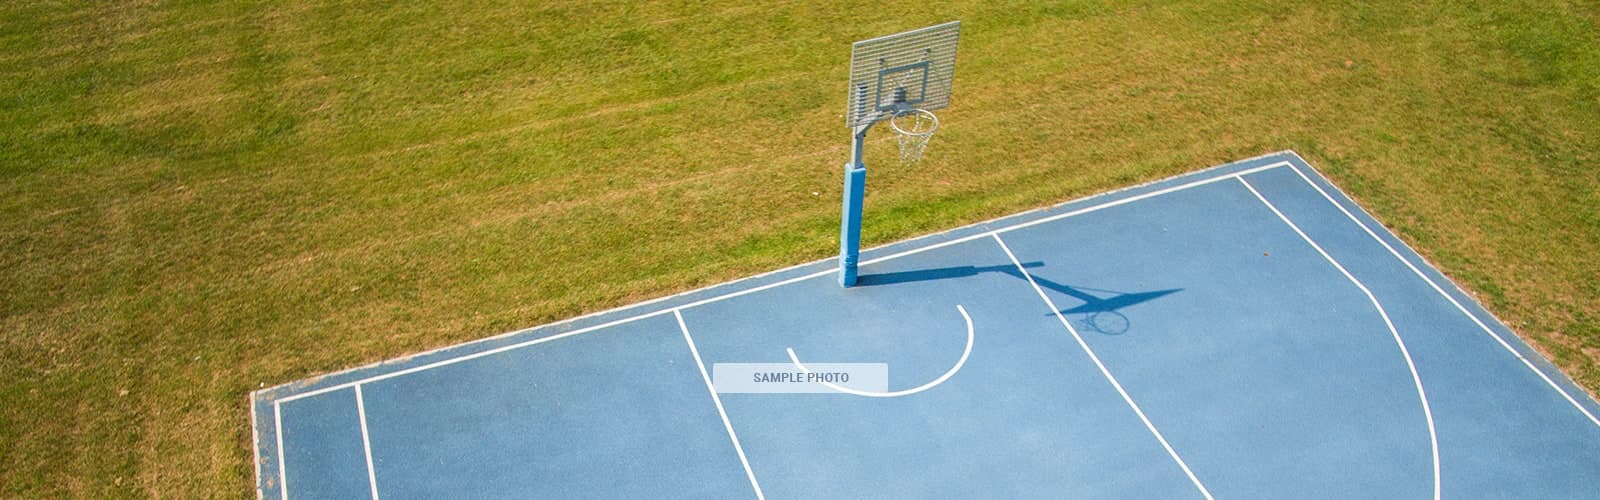 A.V. Fawcett Elementary School Outdoor Basketball Courts in Tacoma Washington